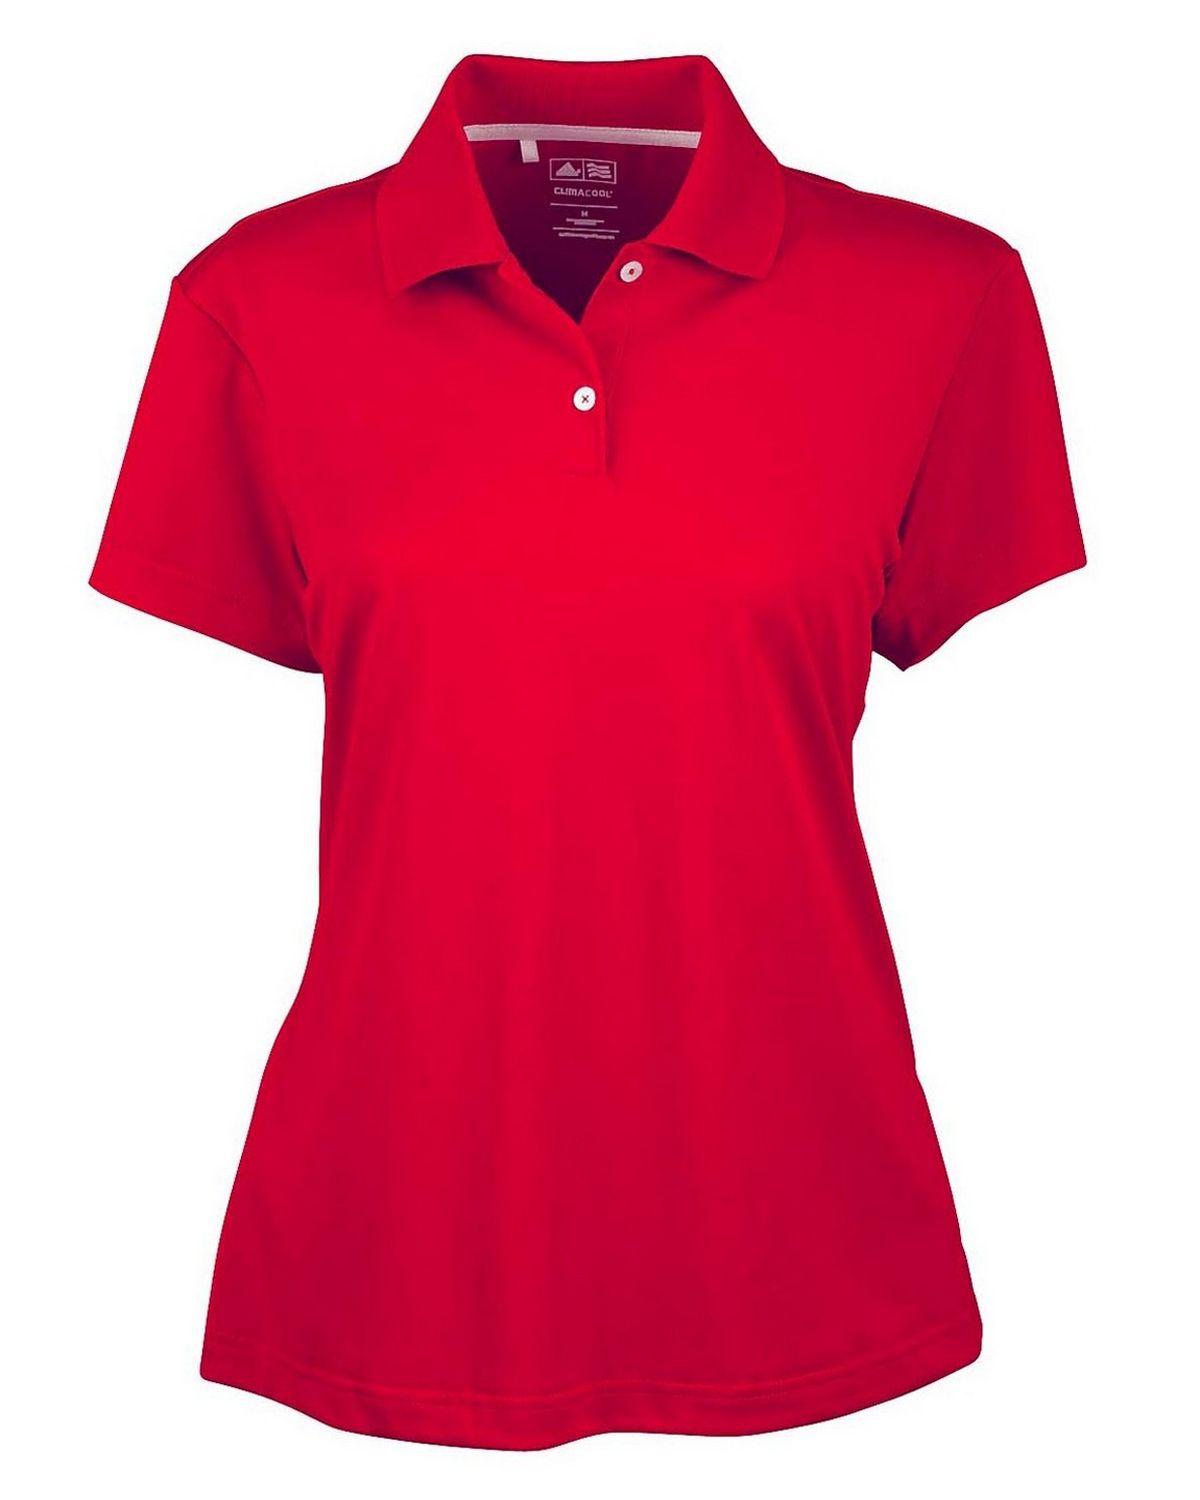 Adidas Golf A122 Ladies’ ClimaLite Short-Sleeve Pique Polo